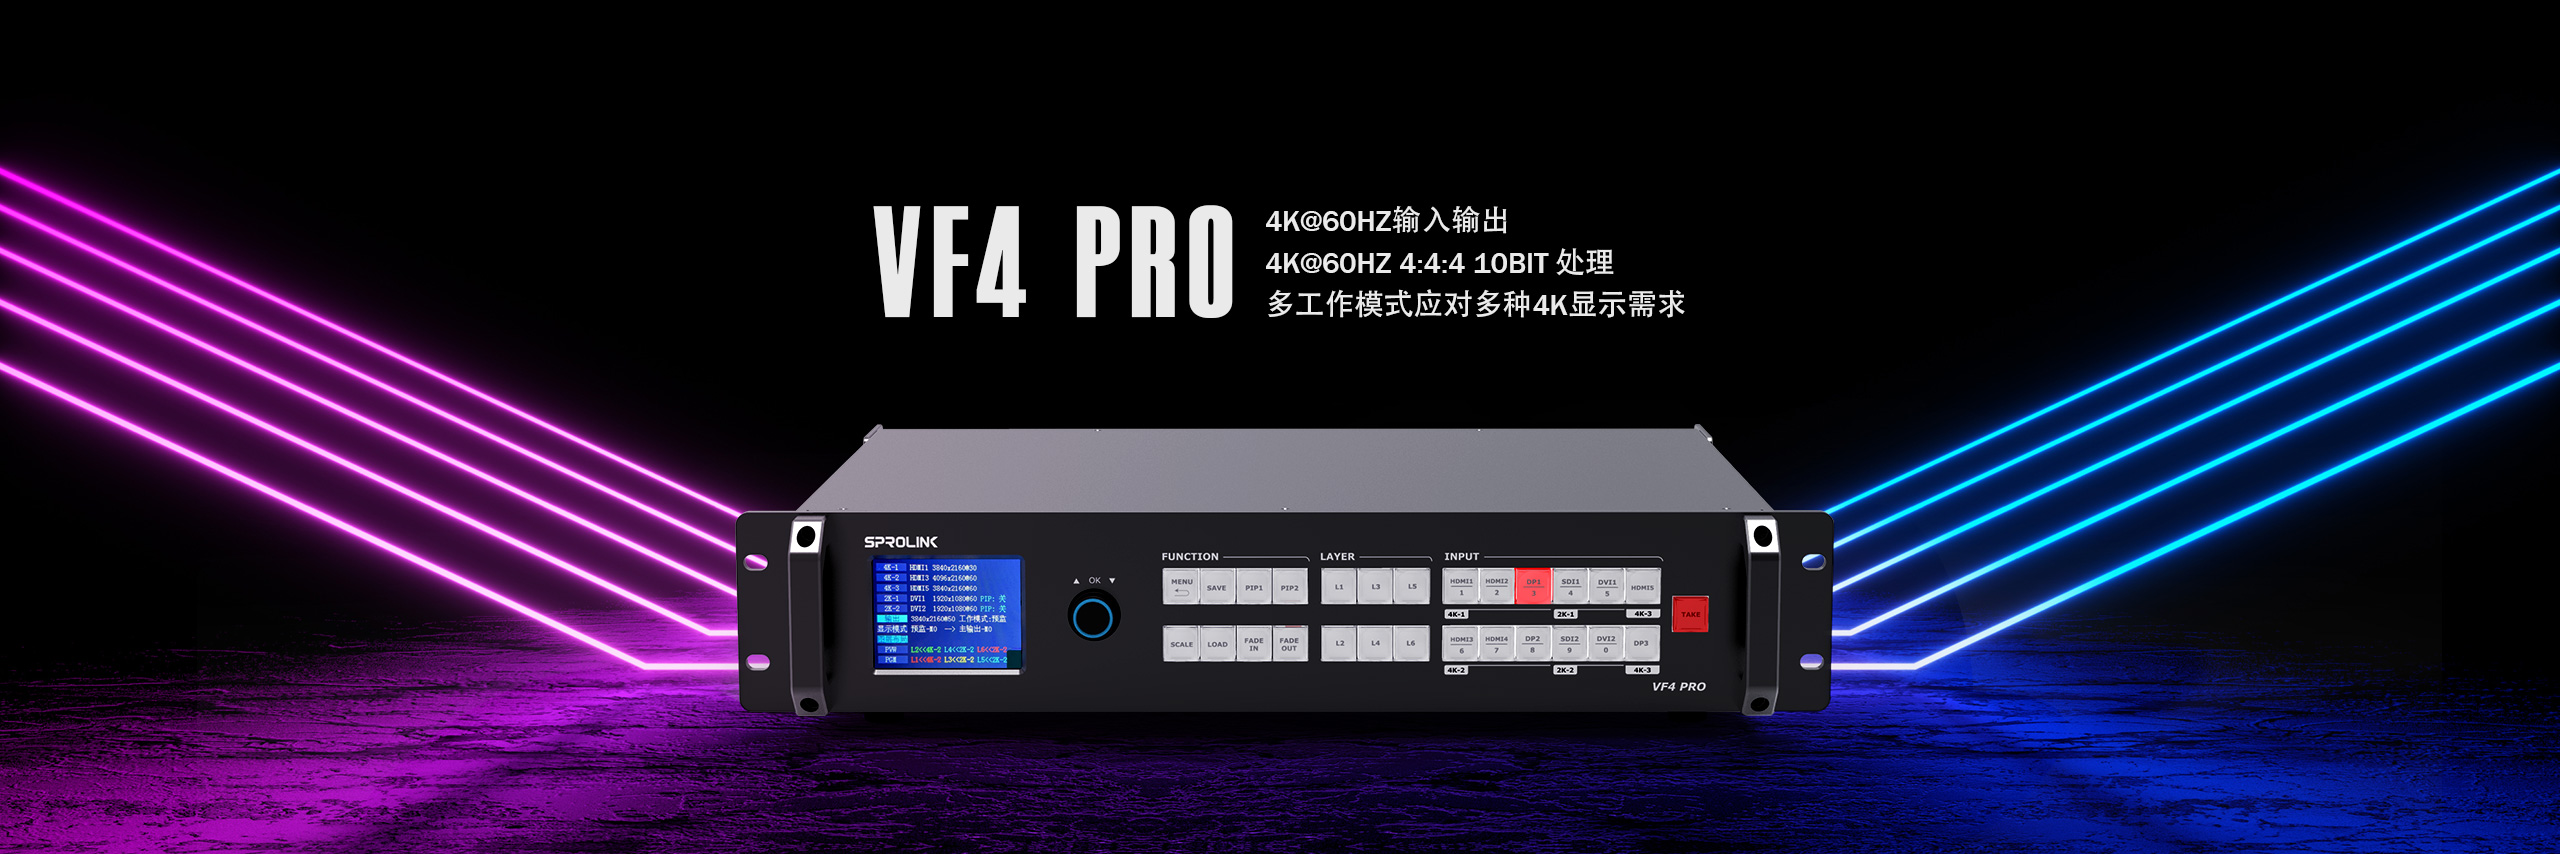 VF4-pro-CN